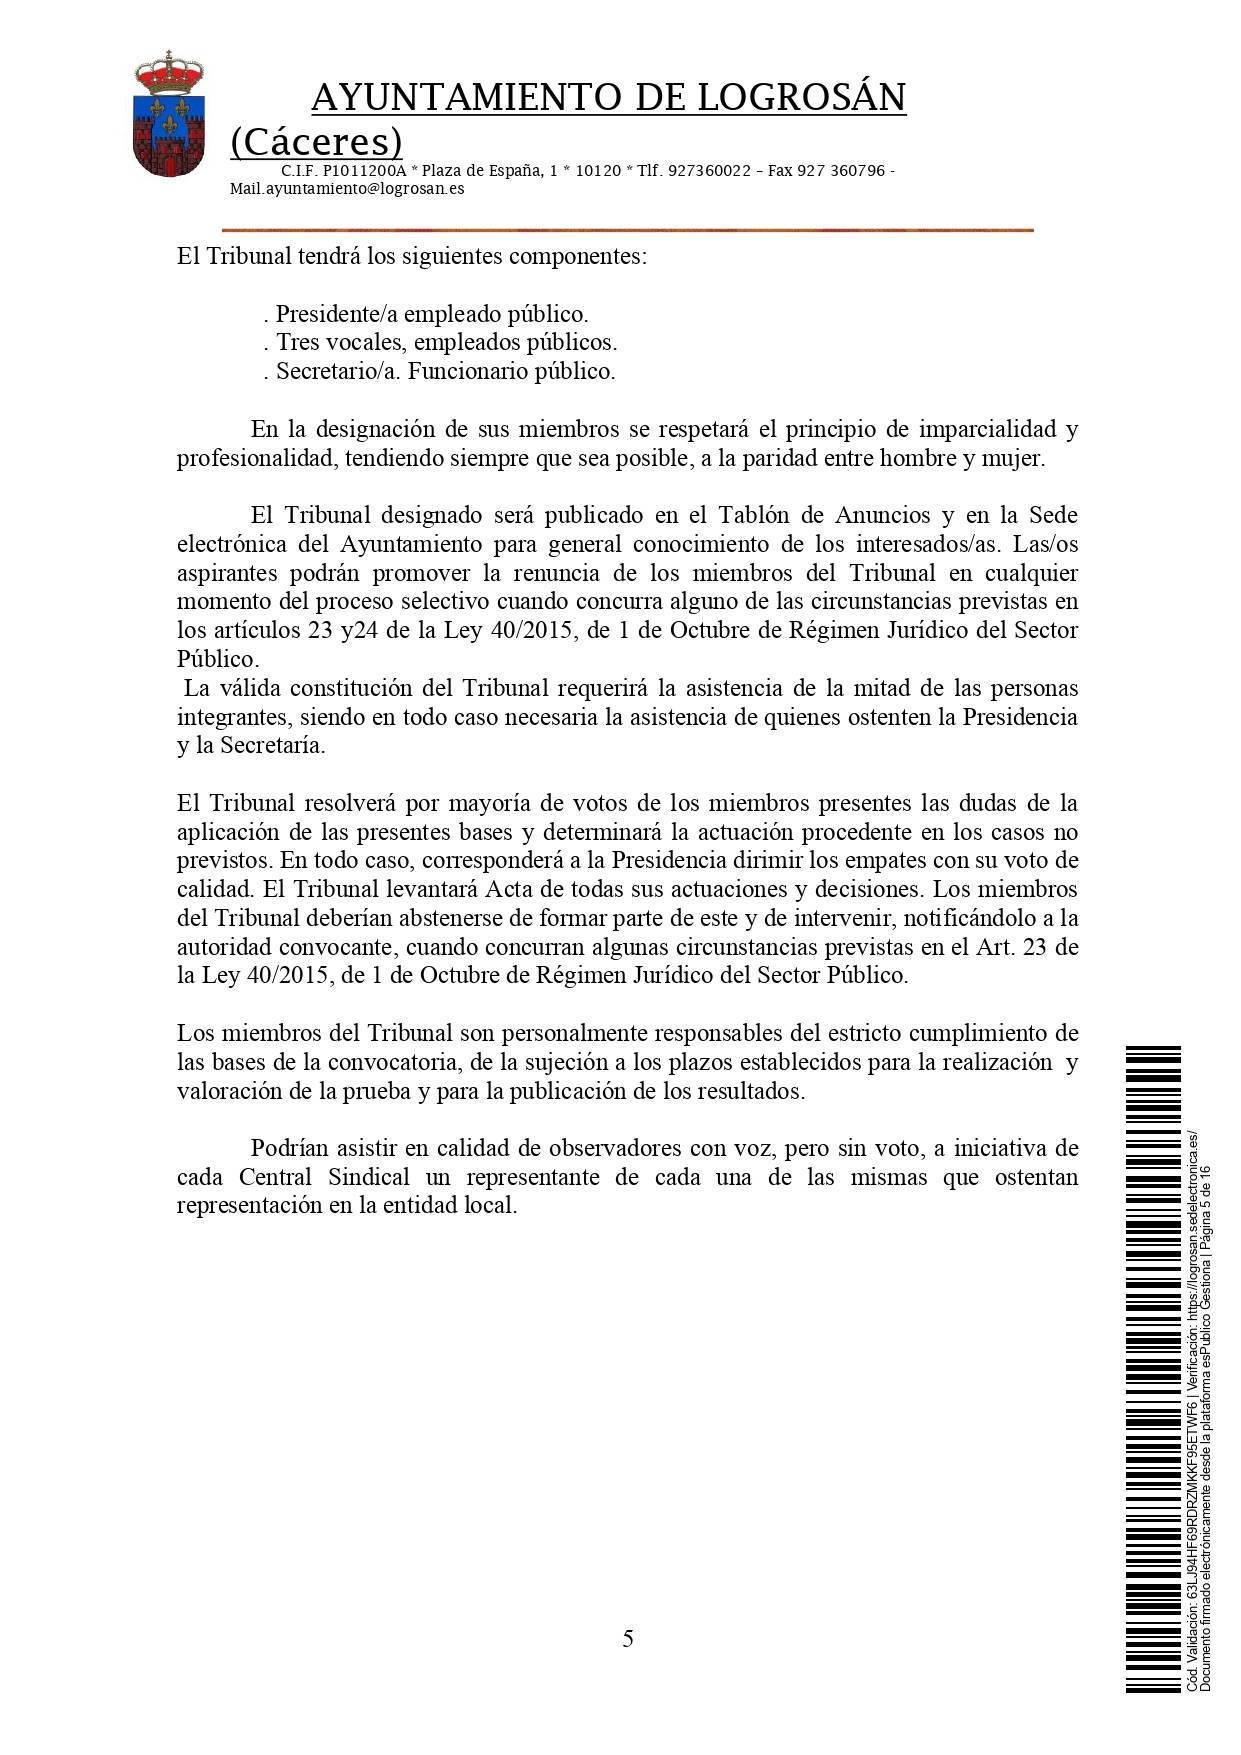 Técnicos-as auxiliar de biblioteca y dinamizador-a cultural (2021) - Logrosán (Cáceres) 5